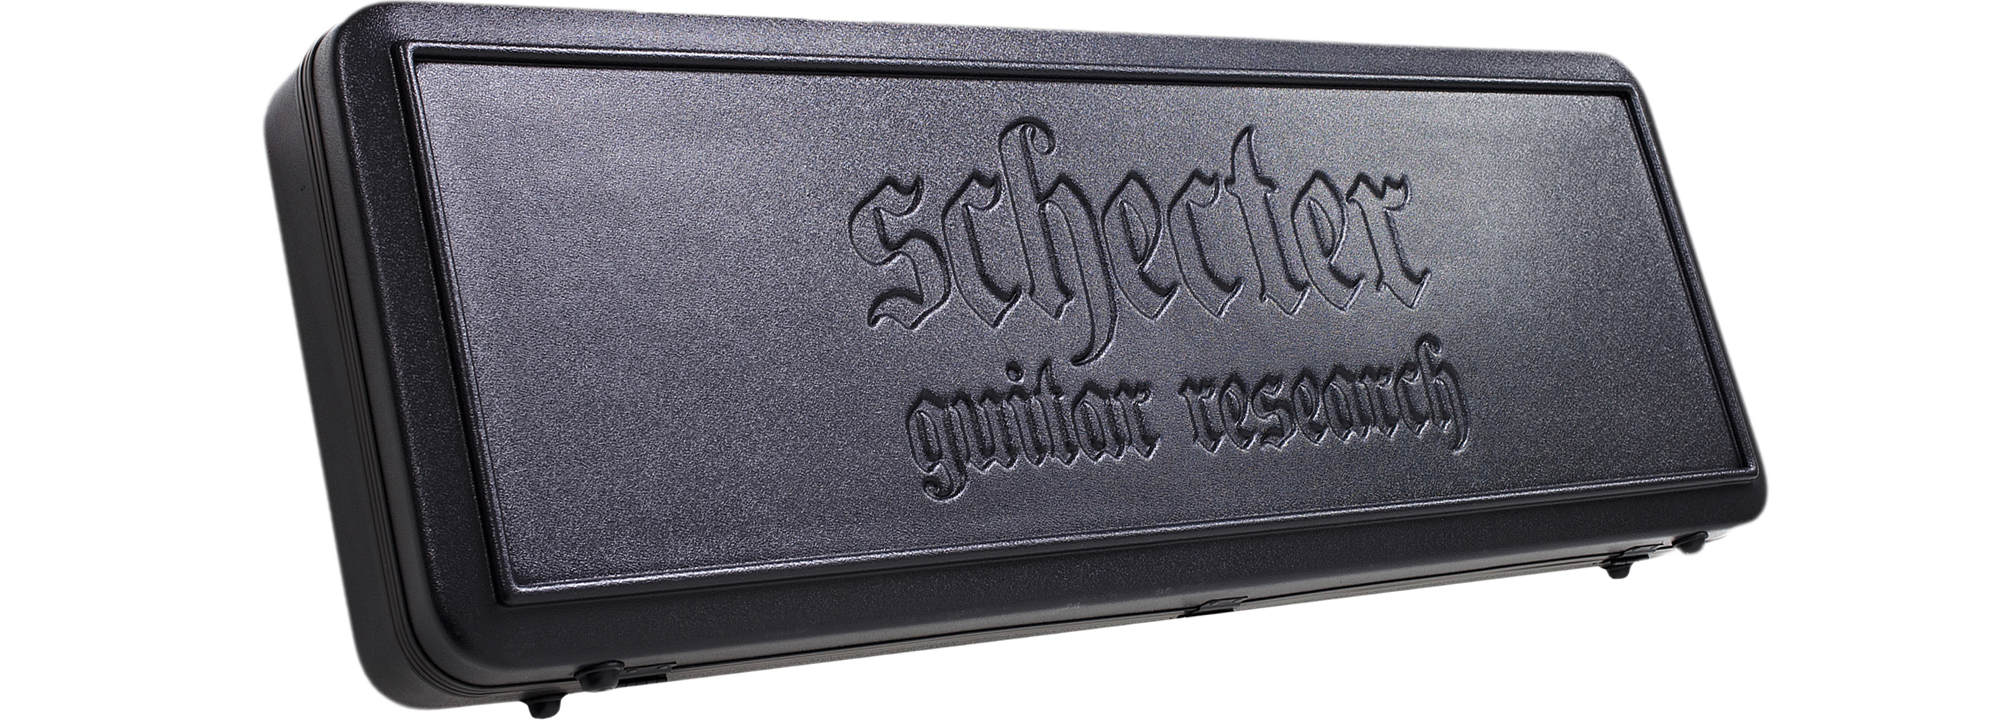 Schecter Universal Guitar Hardcase SGR-Universal SKU 1622 - The Guitar World